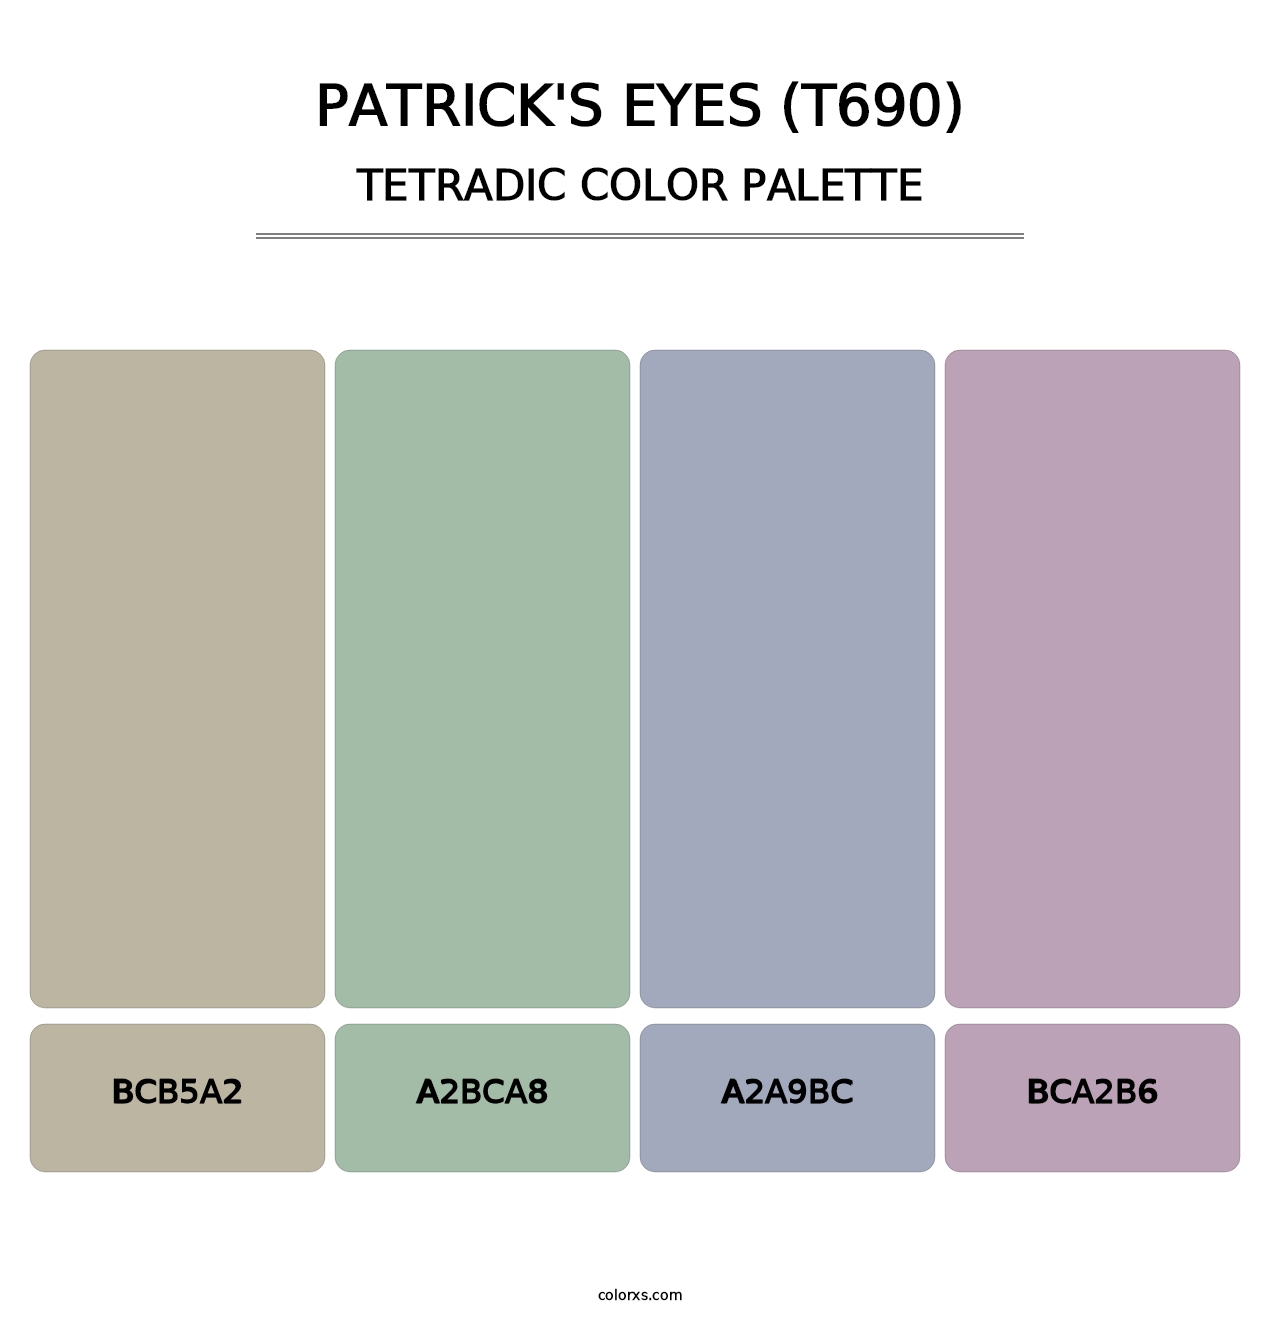 Patrick's Eyes (T690) - Tetradic Color Palette